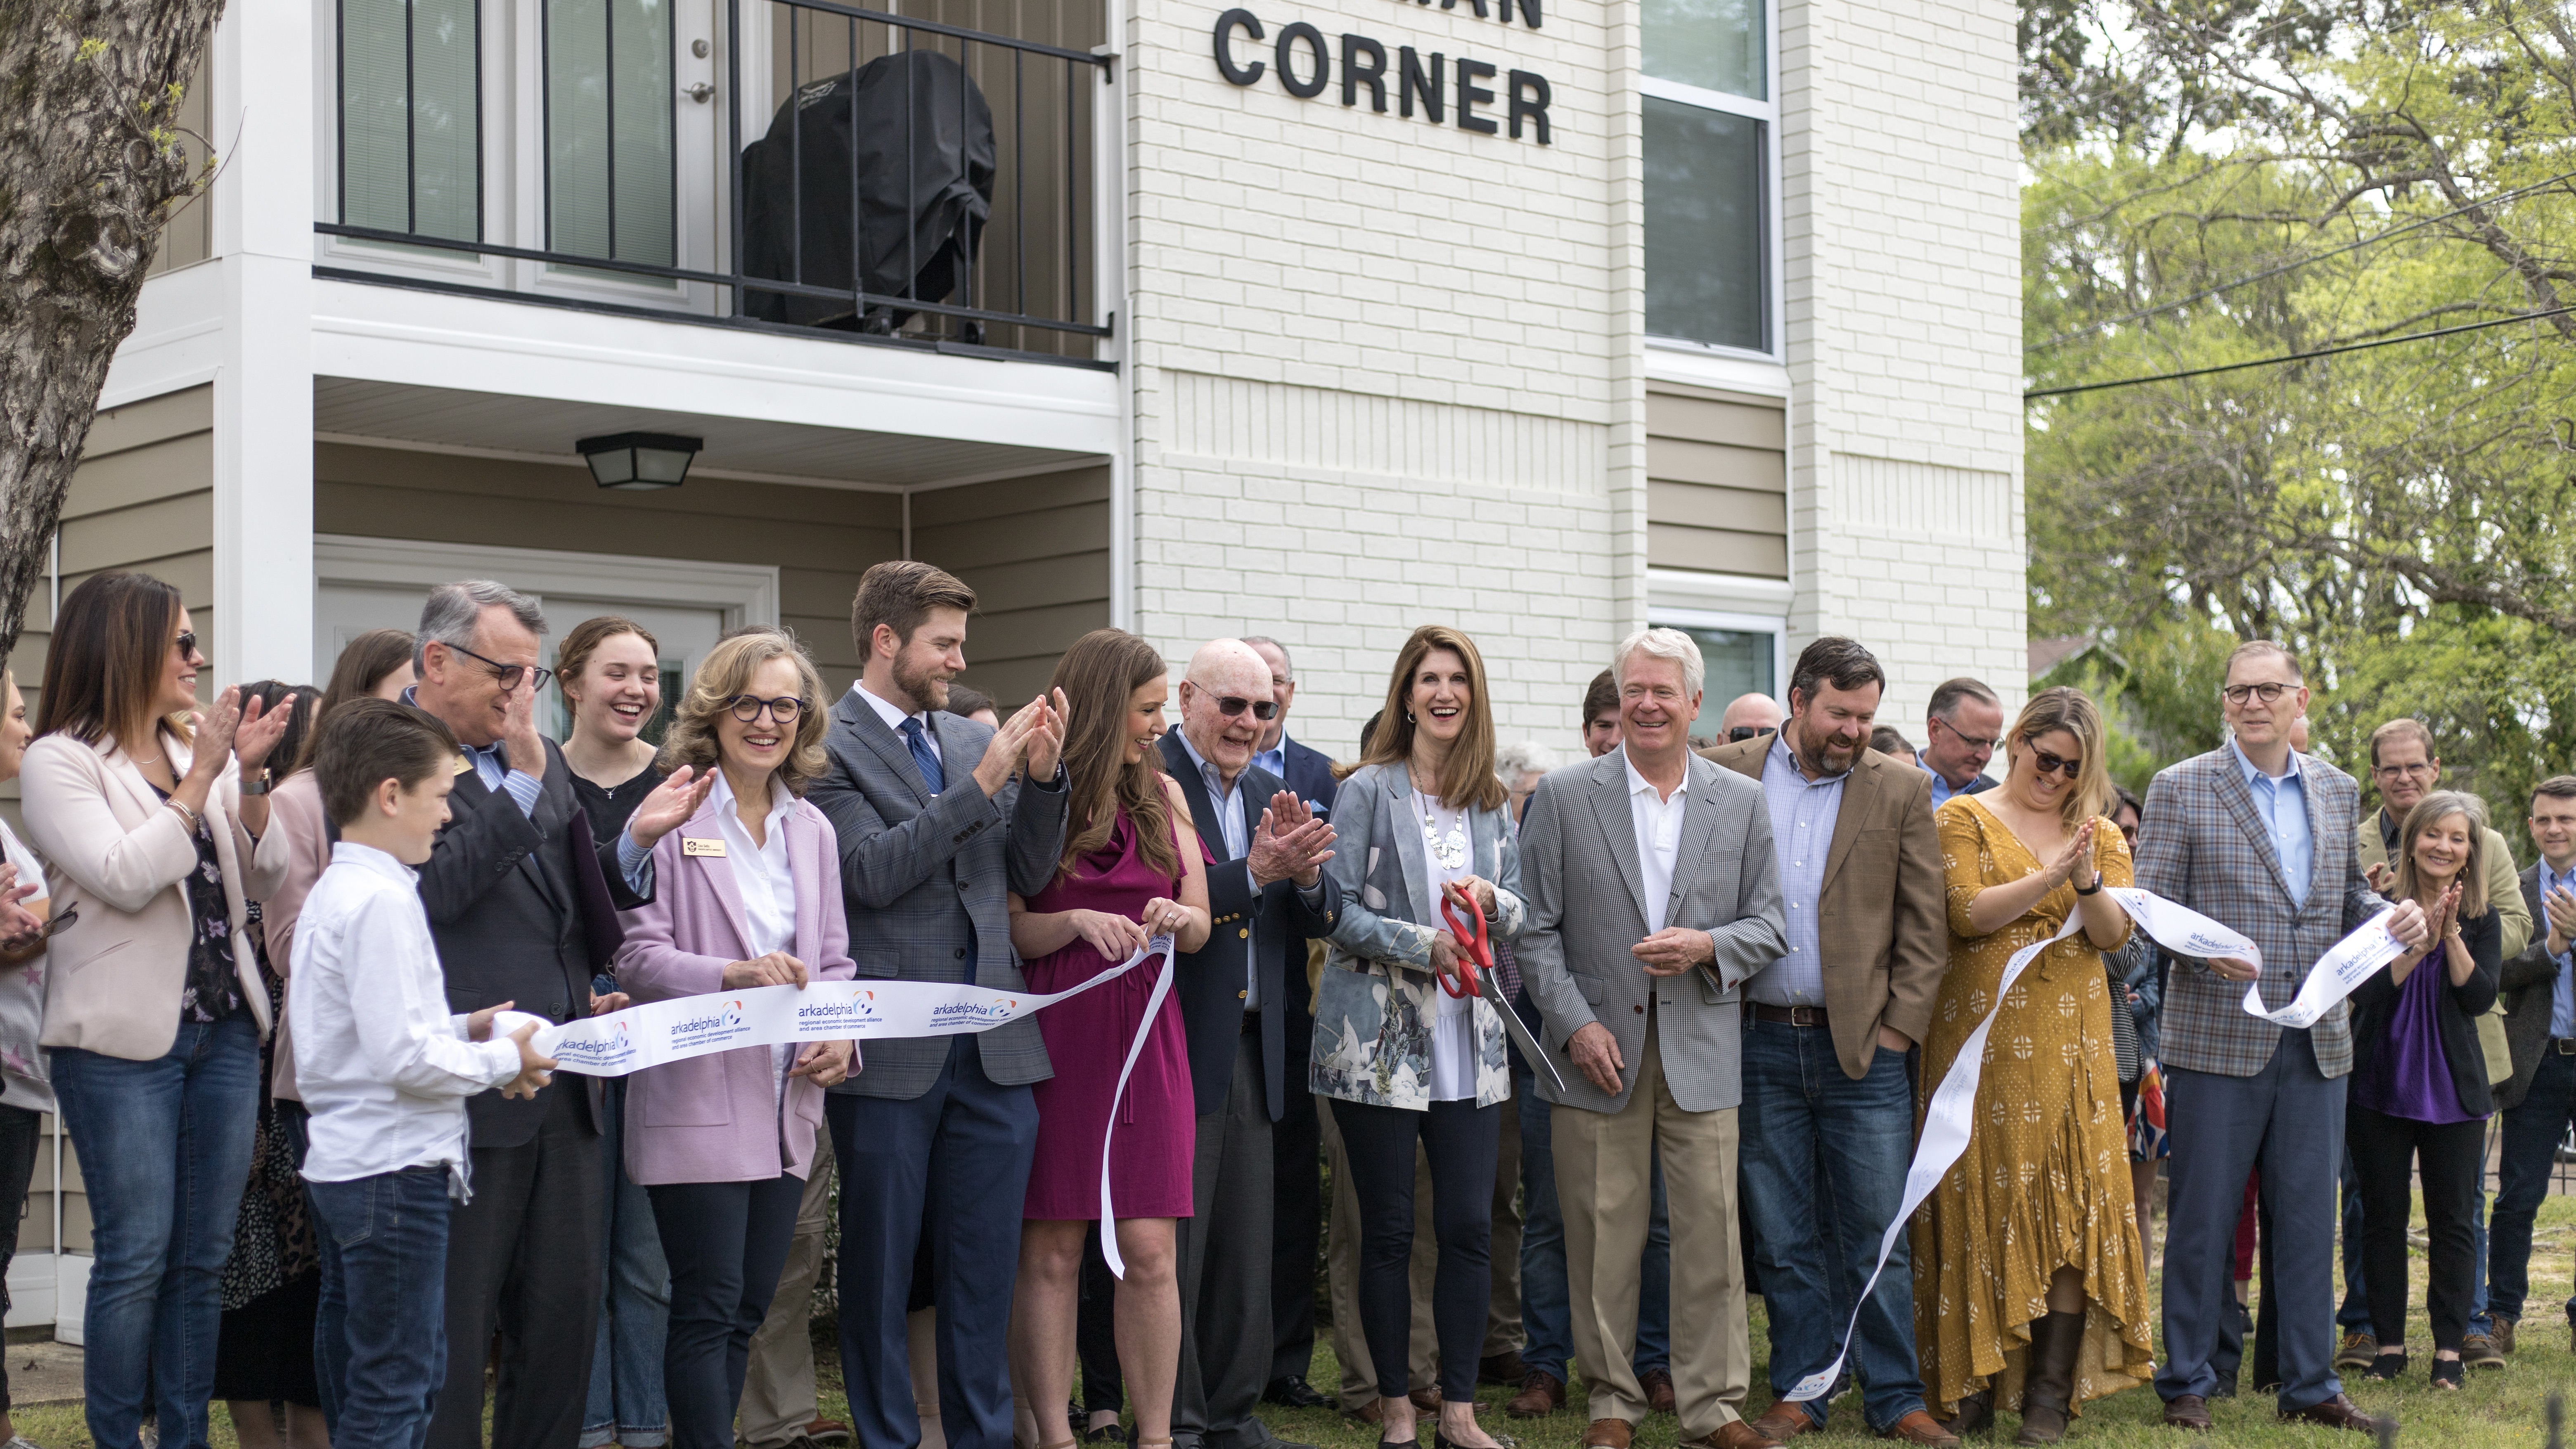 Ribbon-cutting ceremony to dedicate Tatman Corner apartments